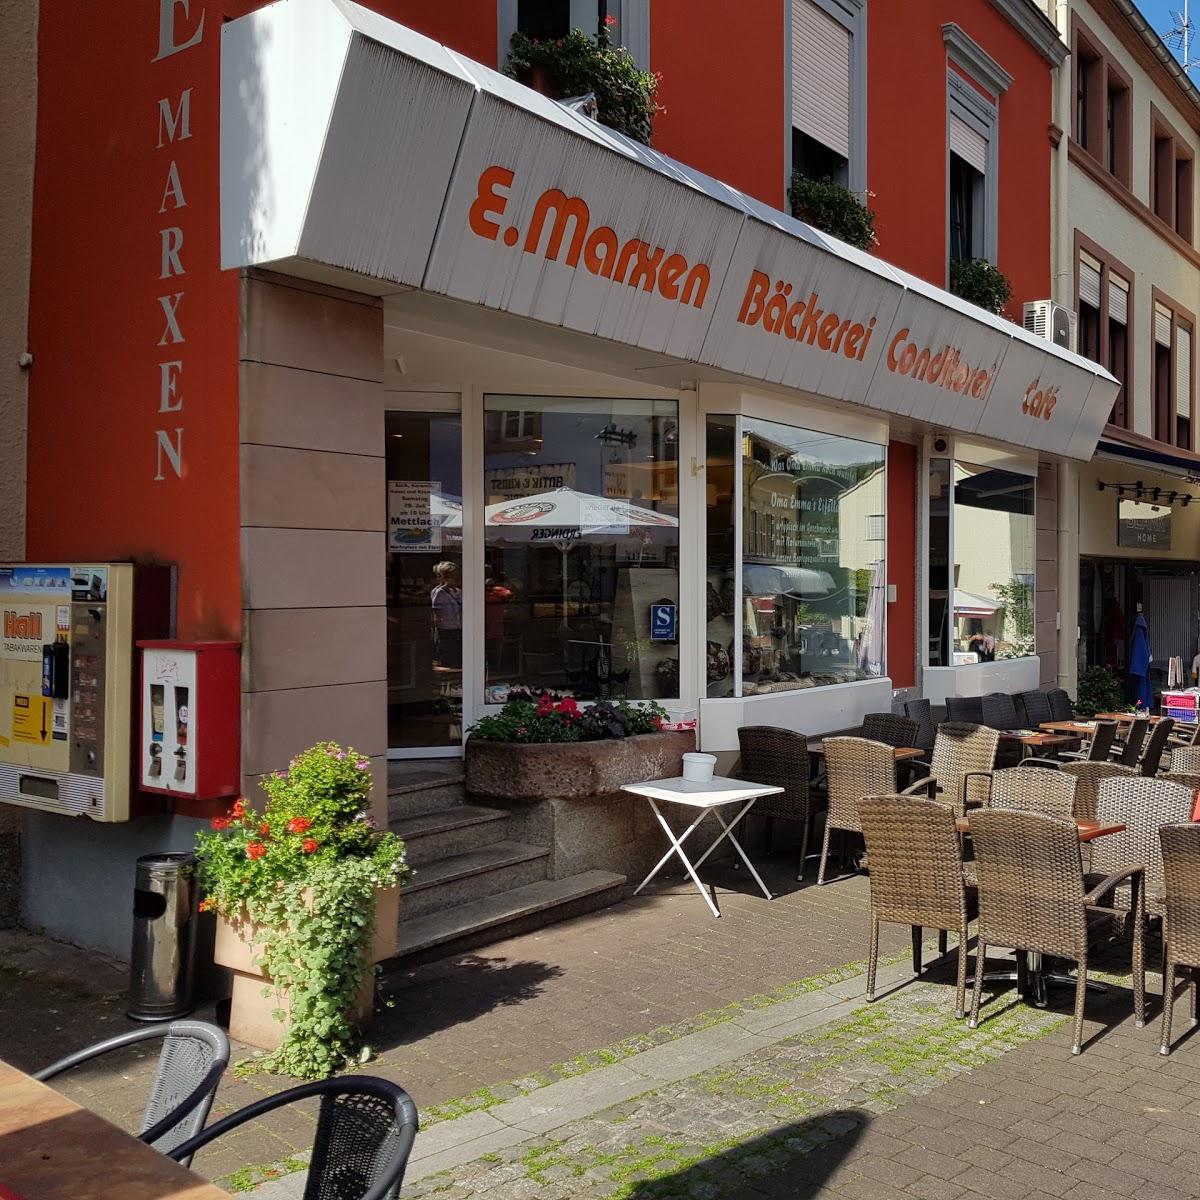 Restaurant "Marxen Bäckerei & Cafe" in Mettlach